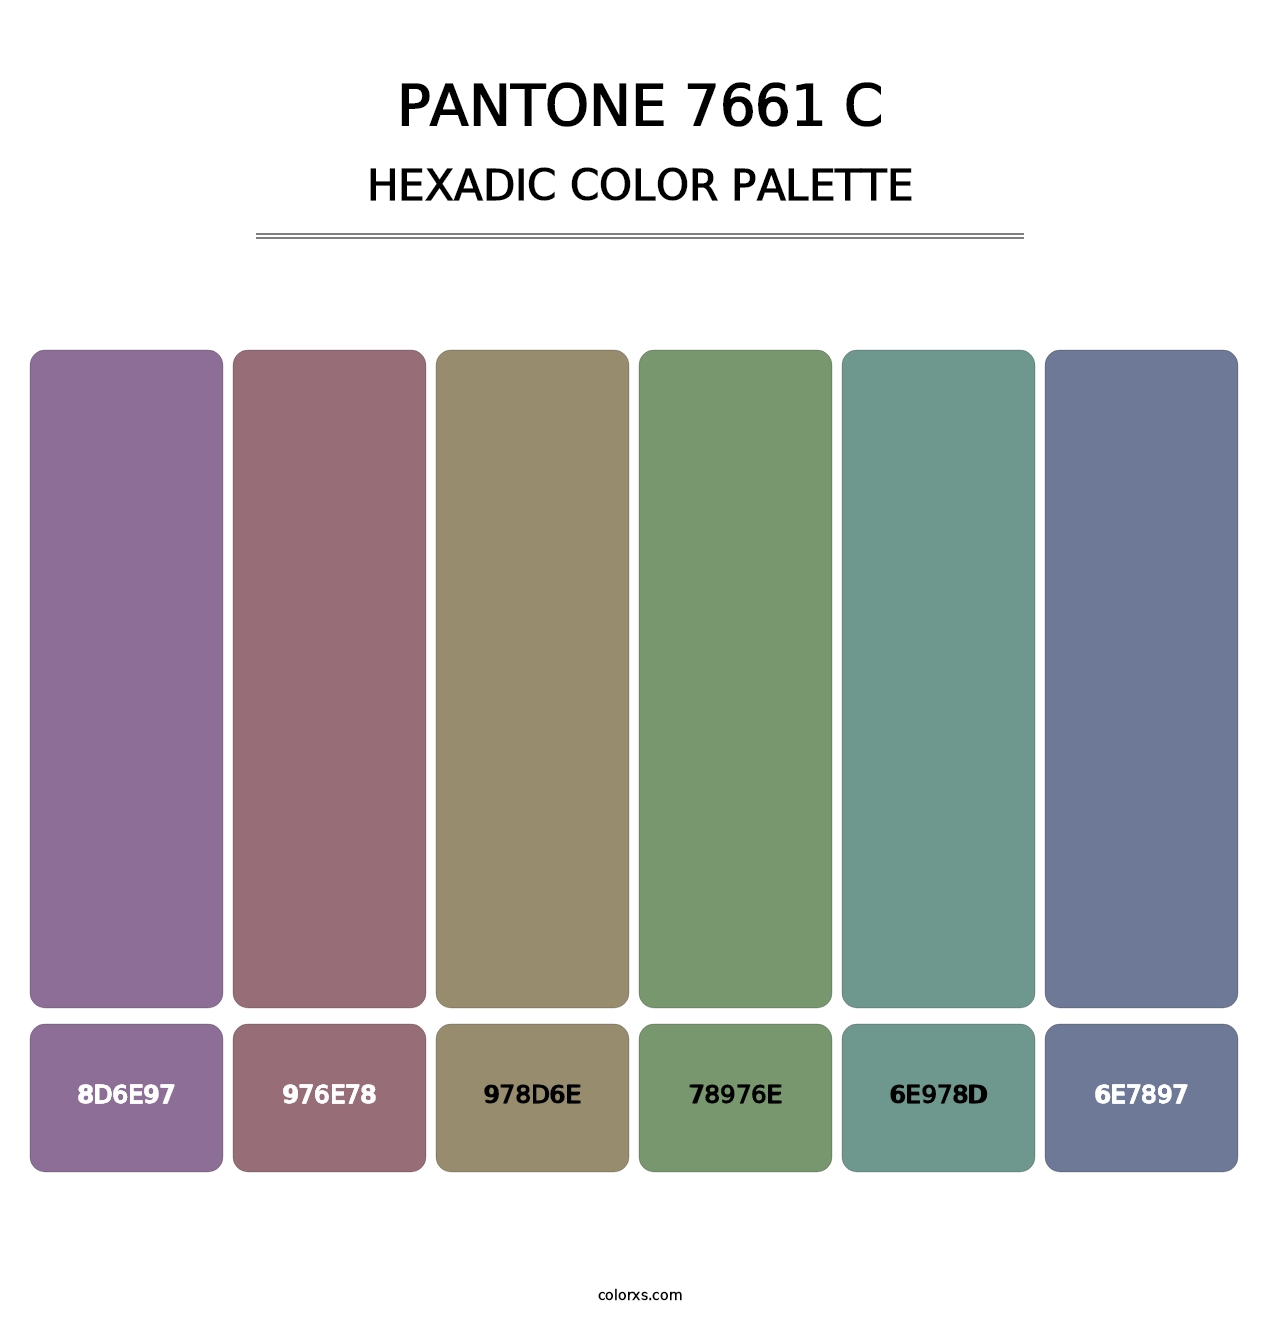 PANTONE 7661 C - Hexadic Color Palette